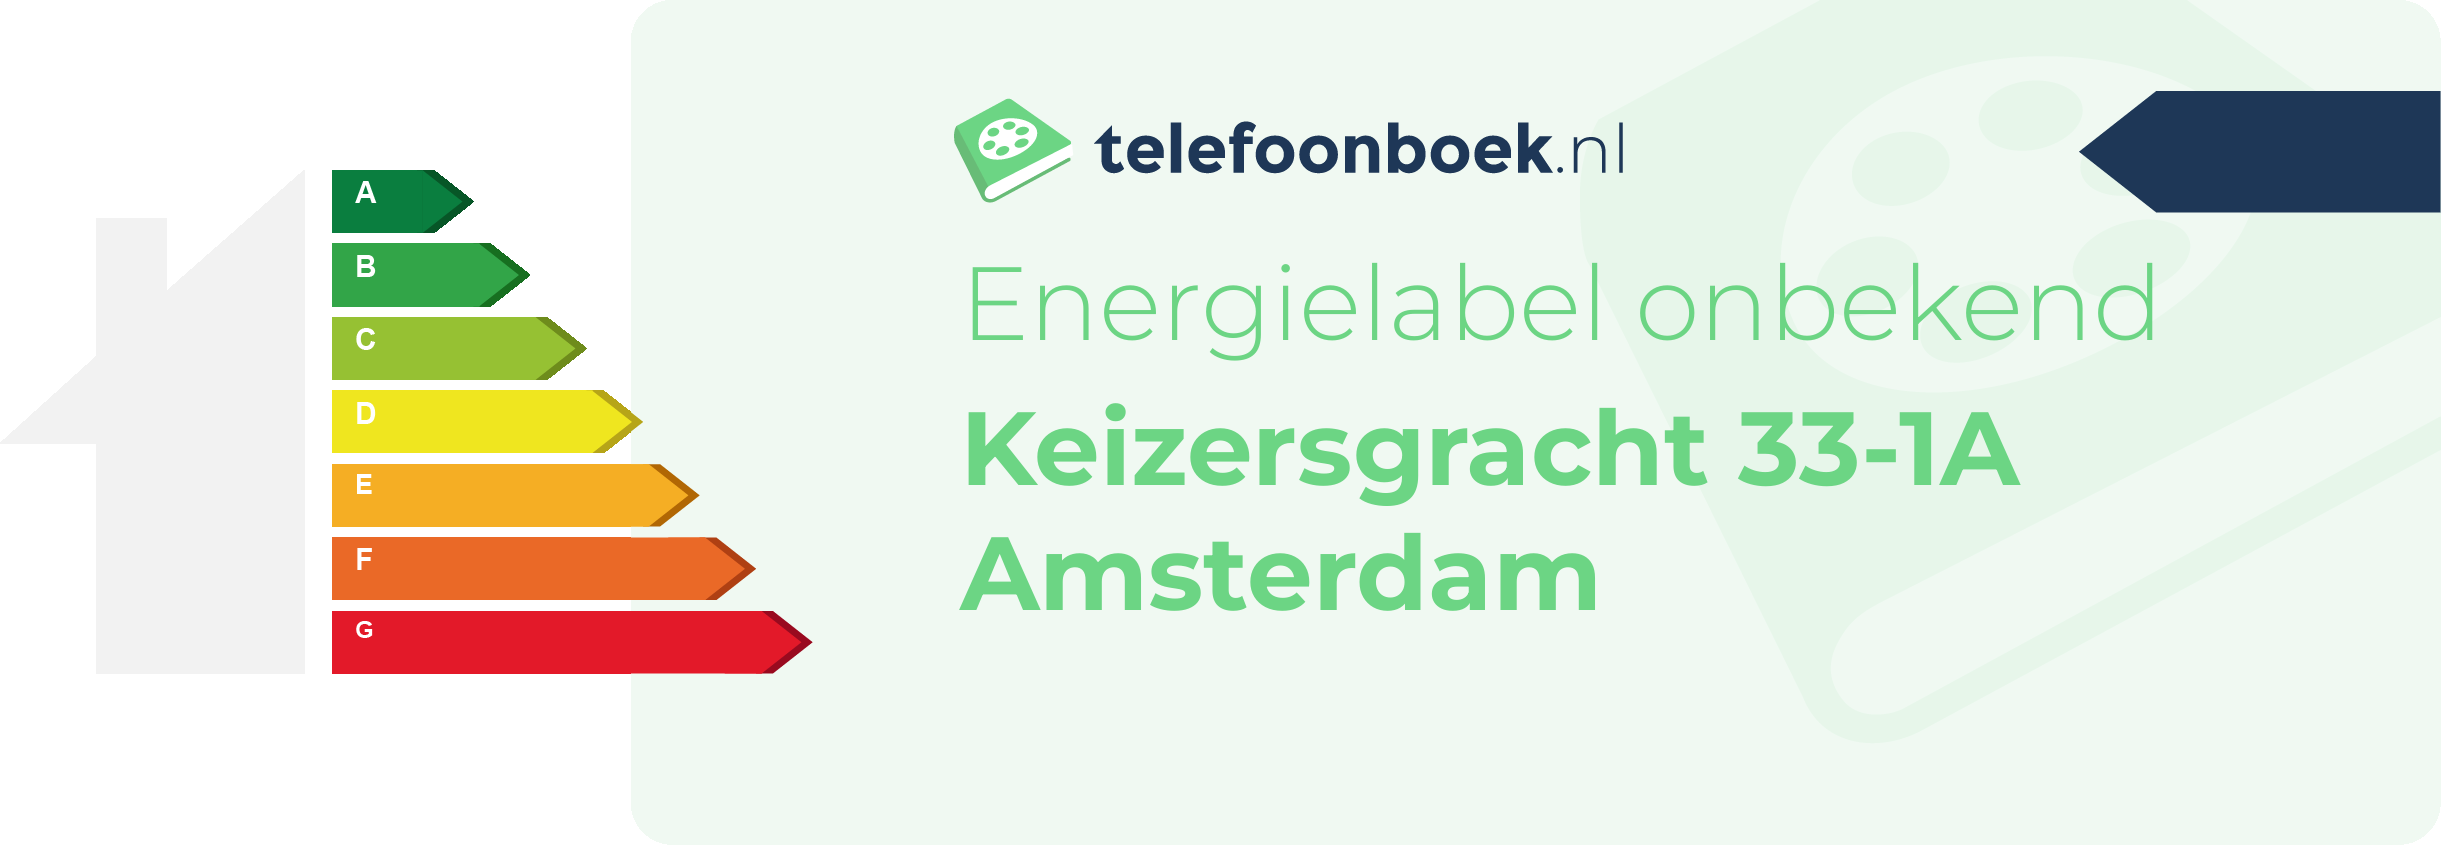 Energielabel Keizersgracht 33-1A Amsterdam